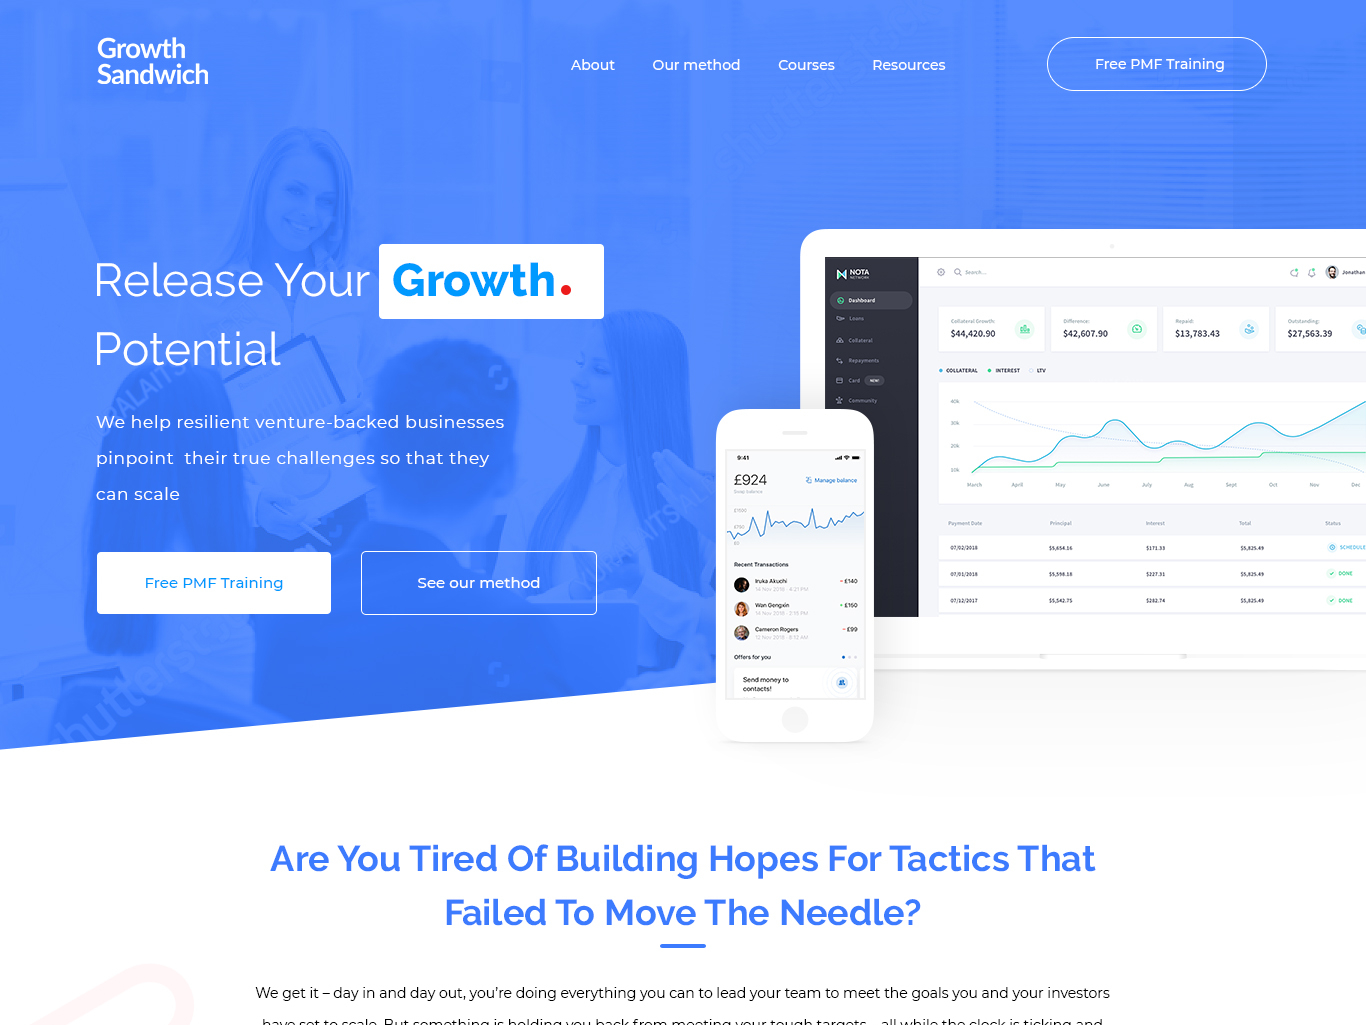 business growth website design